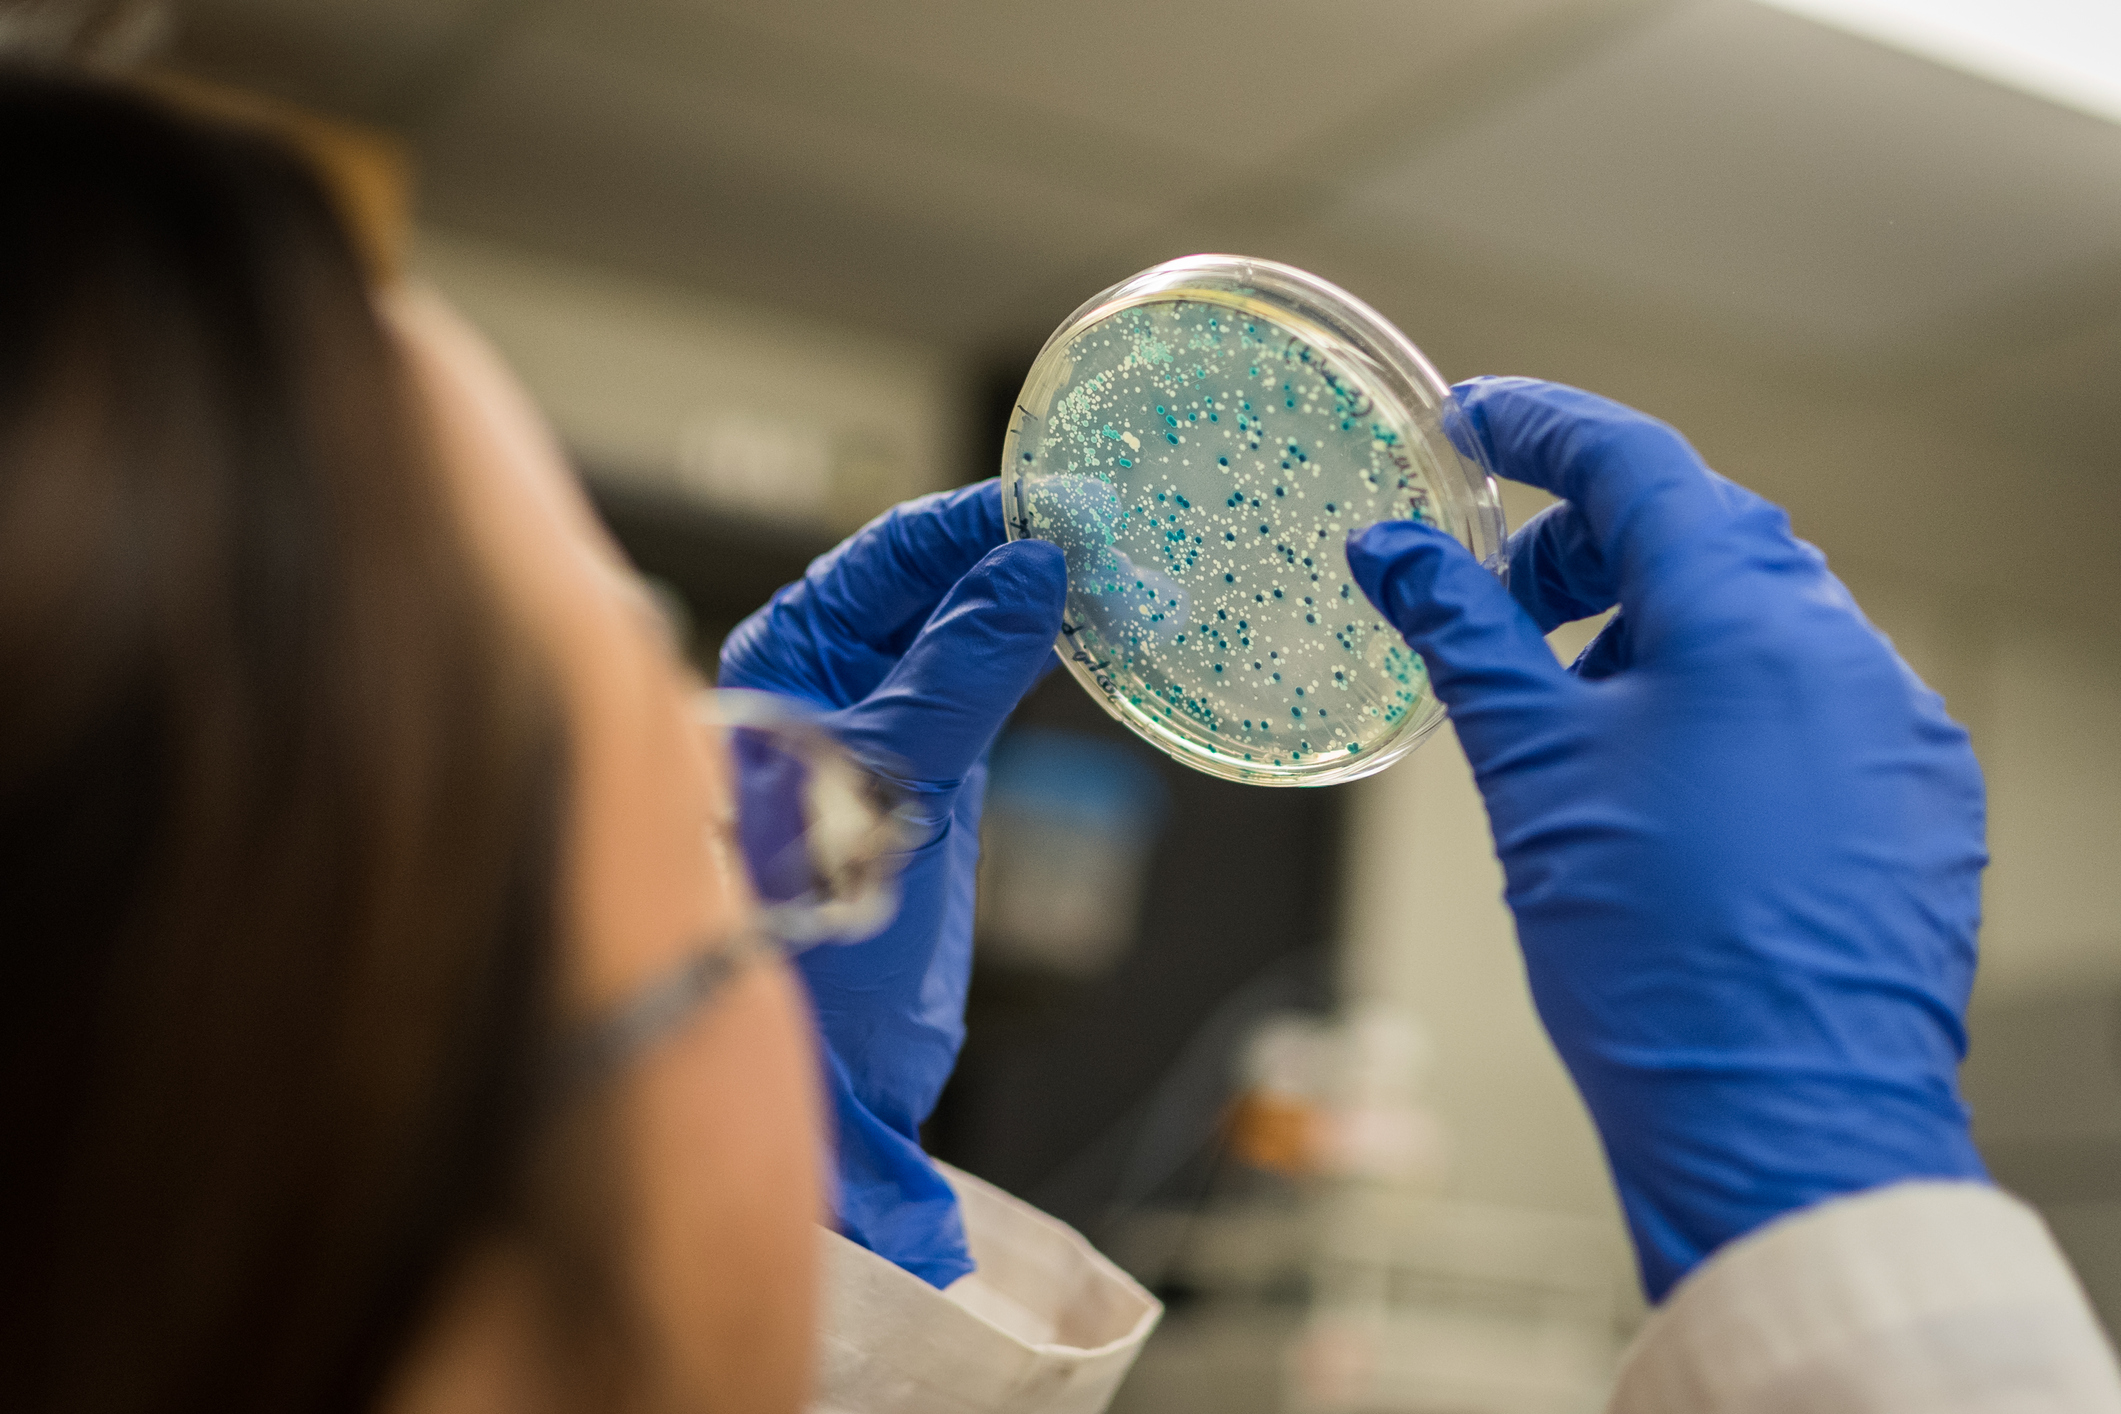 A researcher examining a bacterial culture